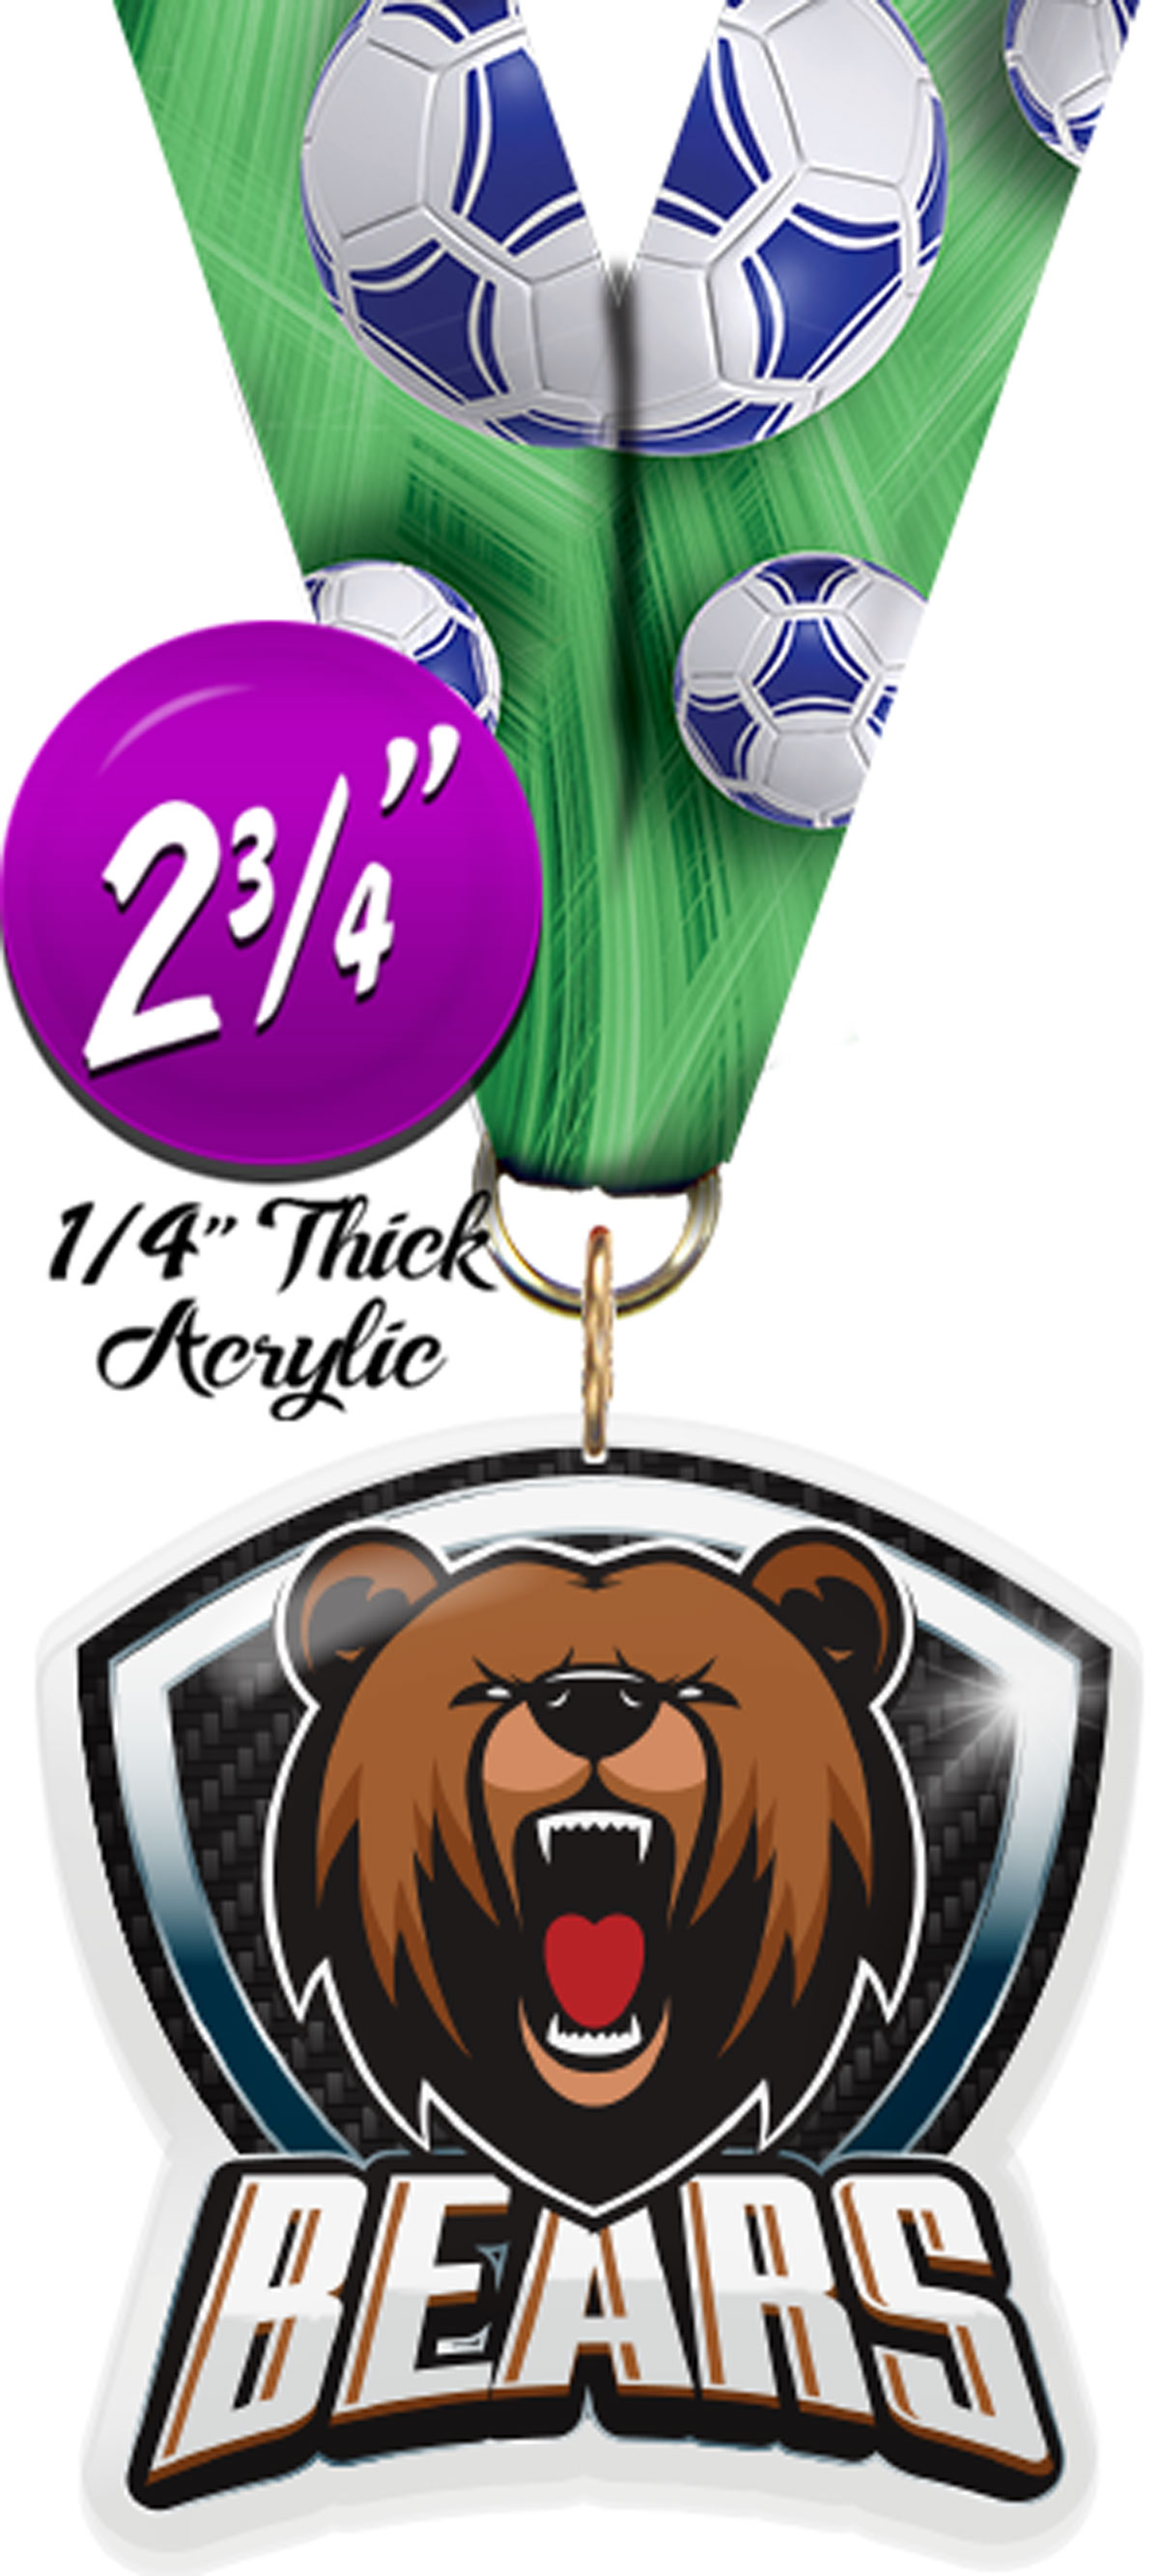 Bear Mascot Shield Colorix Acrylic Medal